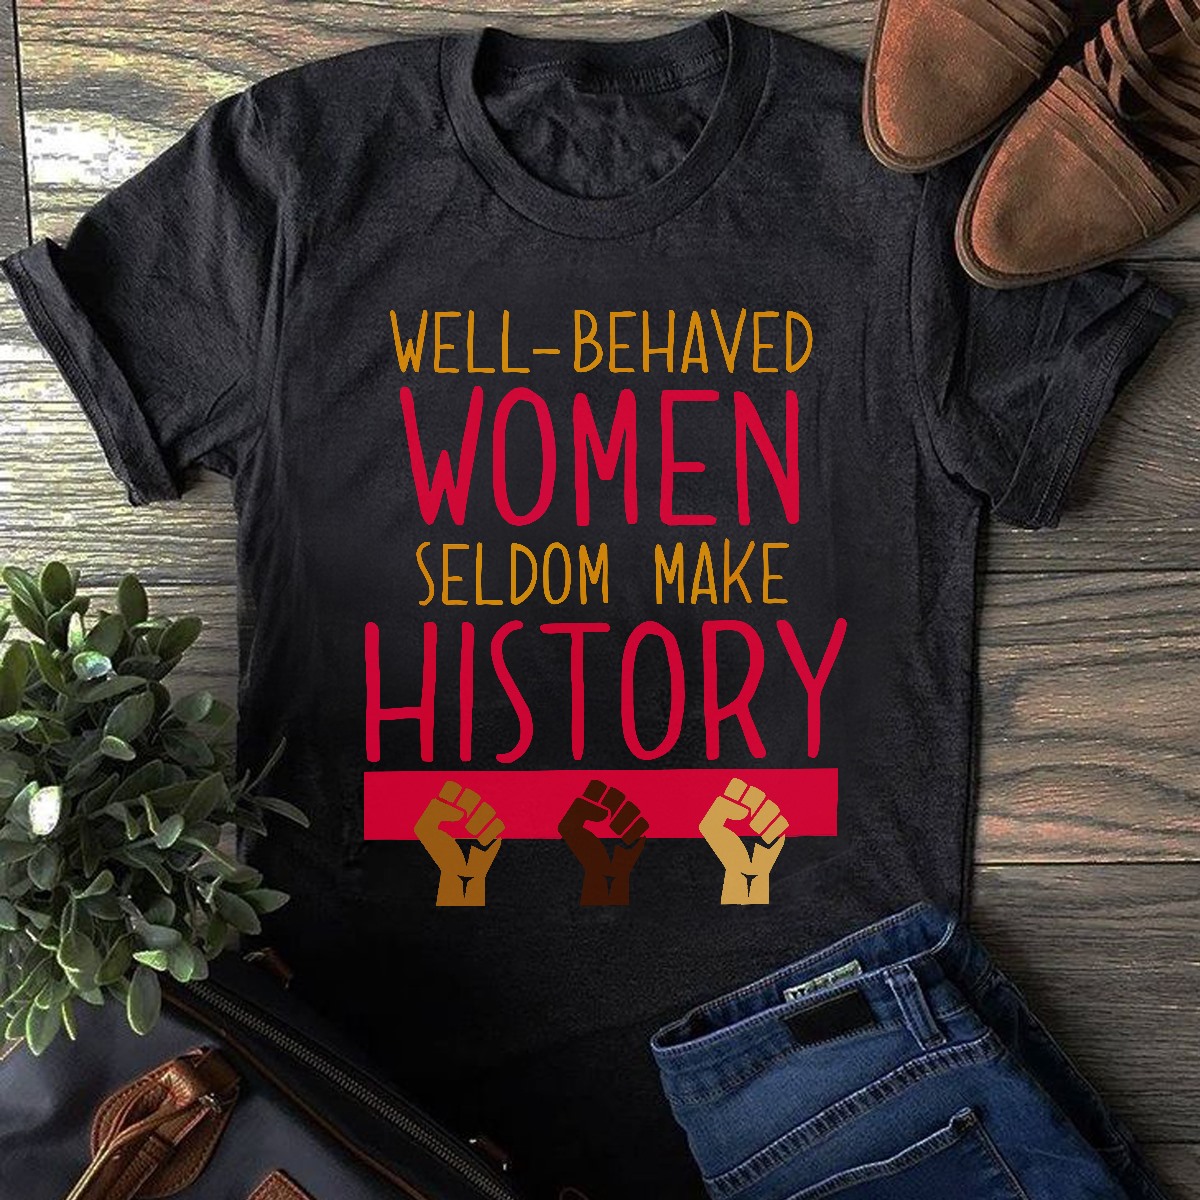 Well-behaved women seldom make history - Asian, black, community Shirt, Hoodie, Sweatshirt -